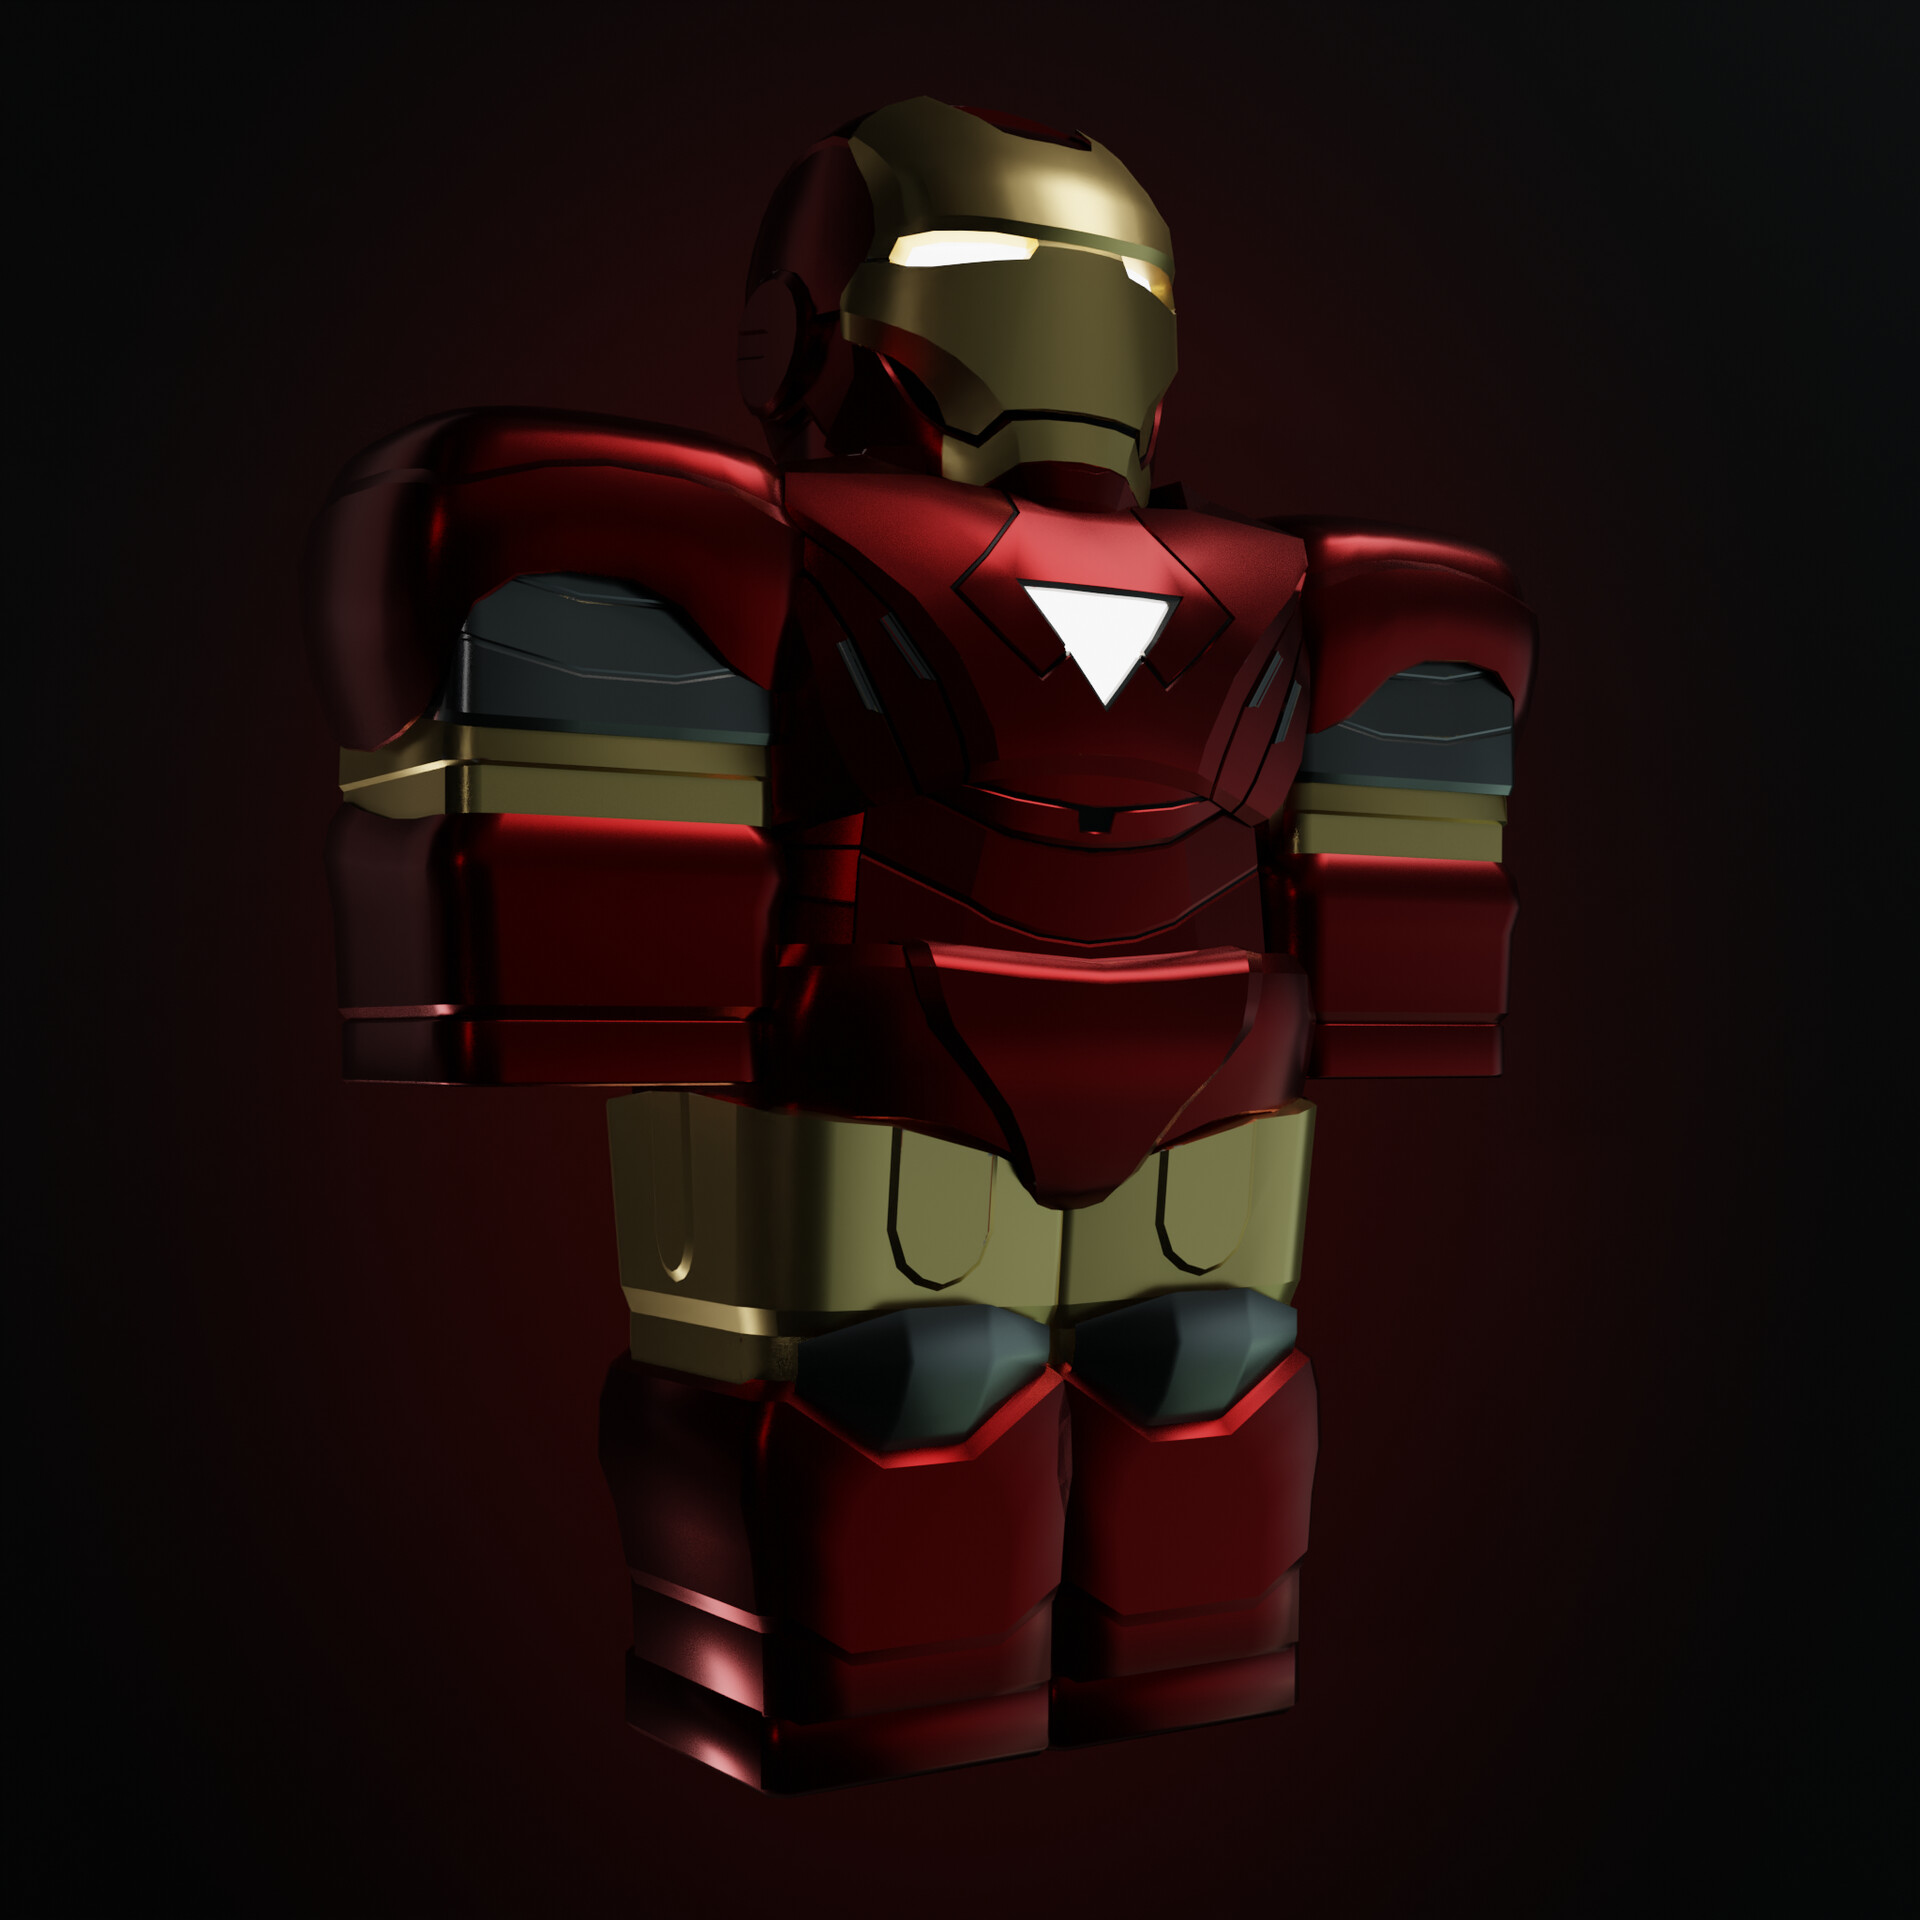 NEW!) Iron Man - Roblox